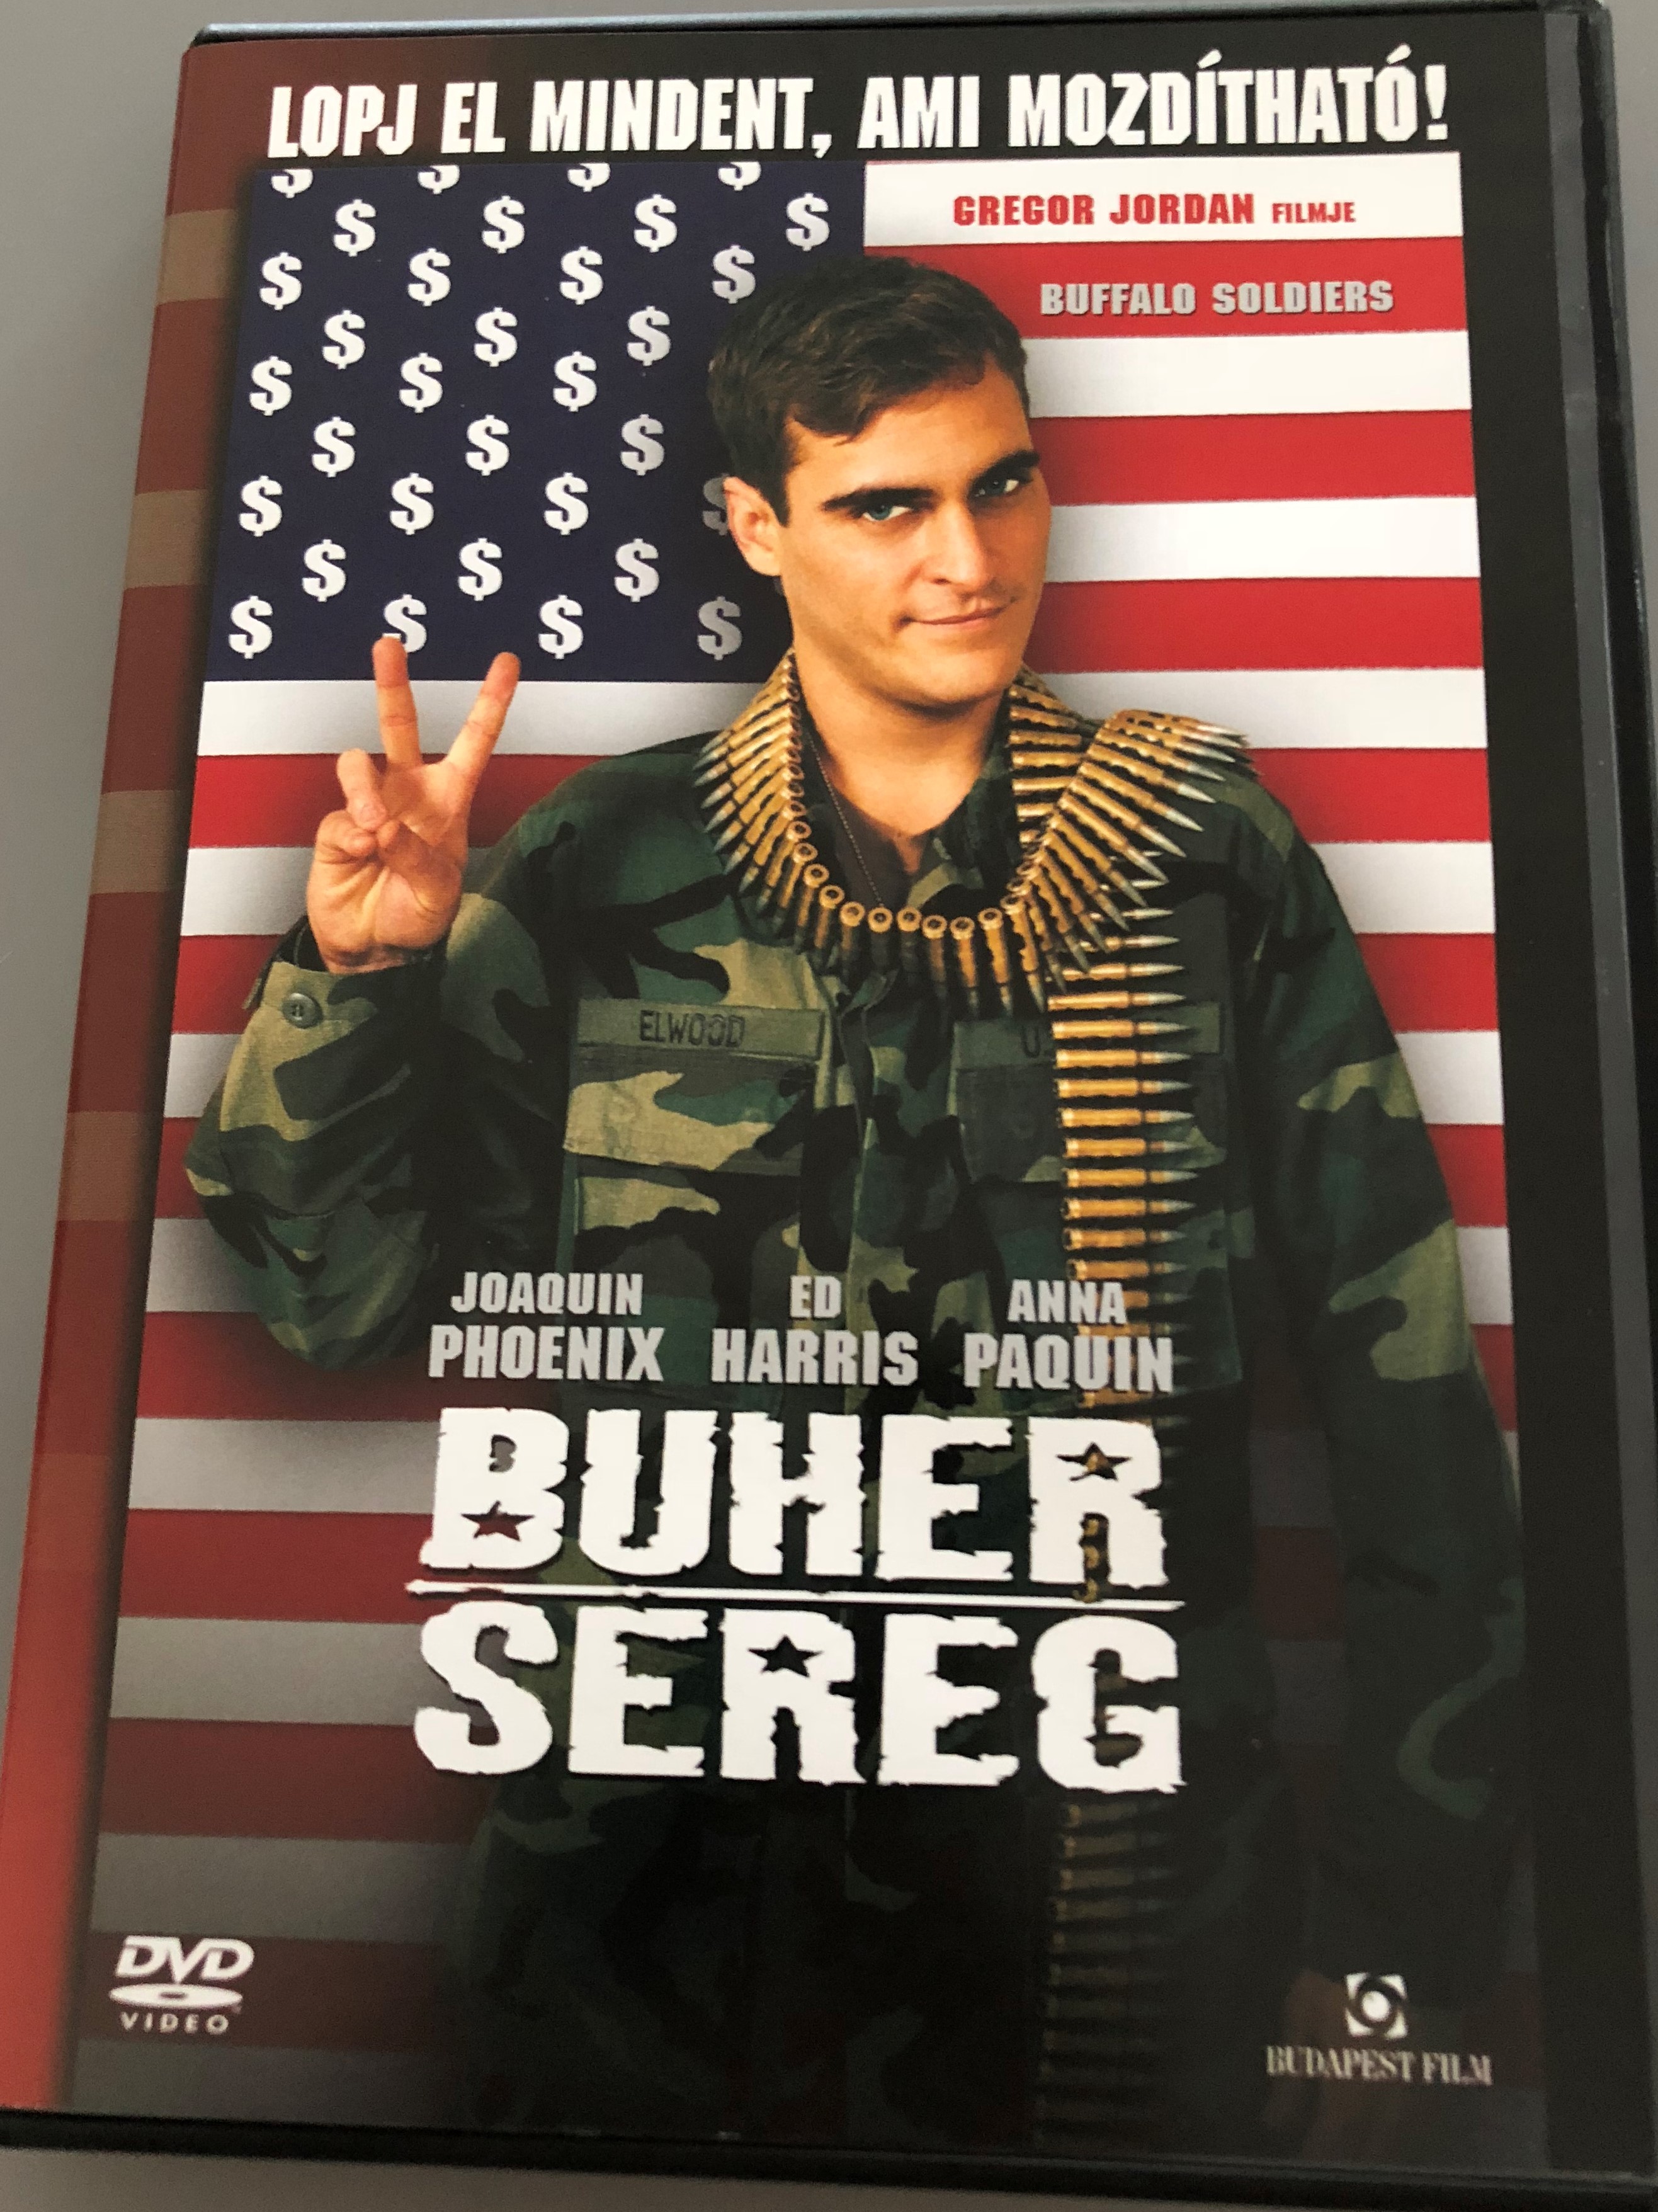 buffalo-soldiers-dvd-2001-buher-sereg-directed-by-gregor-jordan-starring-joaquin-phoenix-ed-harris-anna-paquin-scott-glenn-haluk-bilginer-1-.jpg